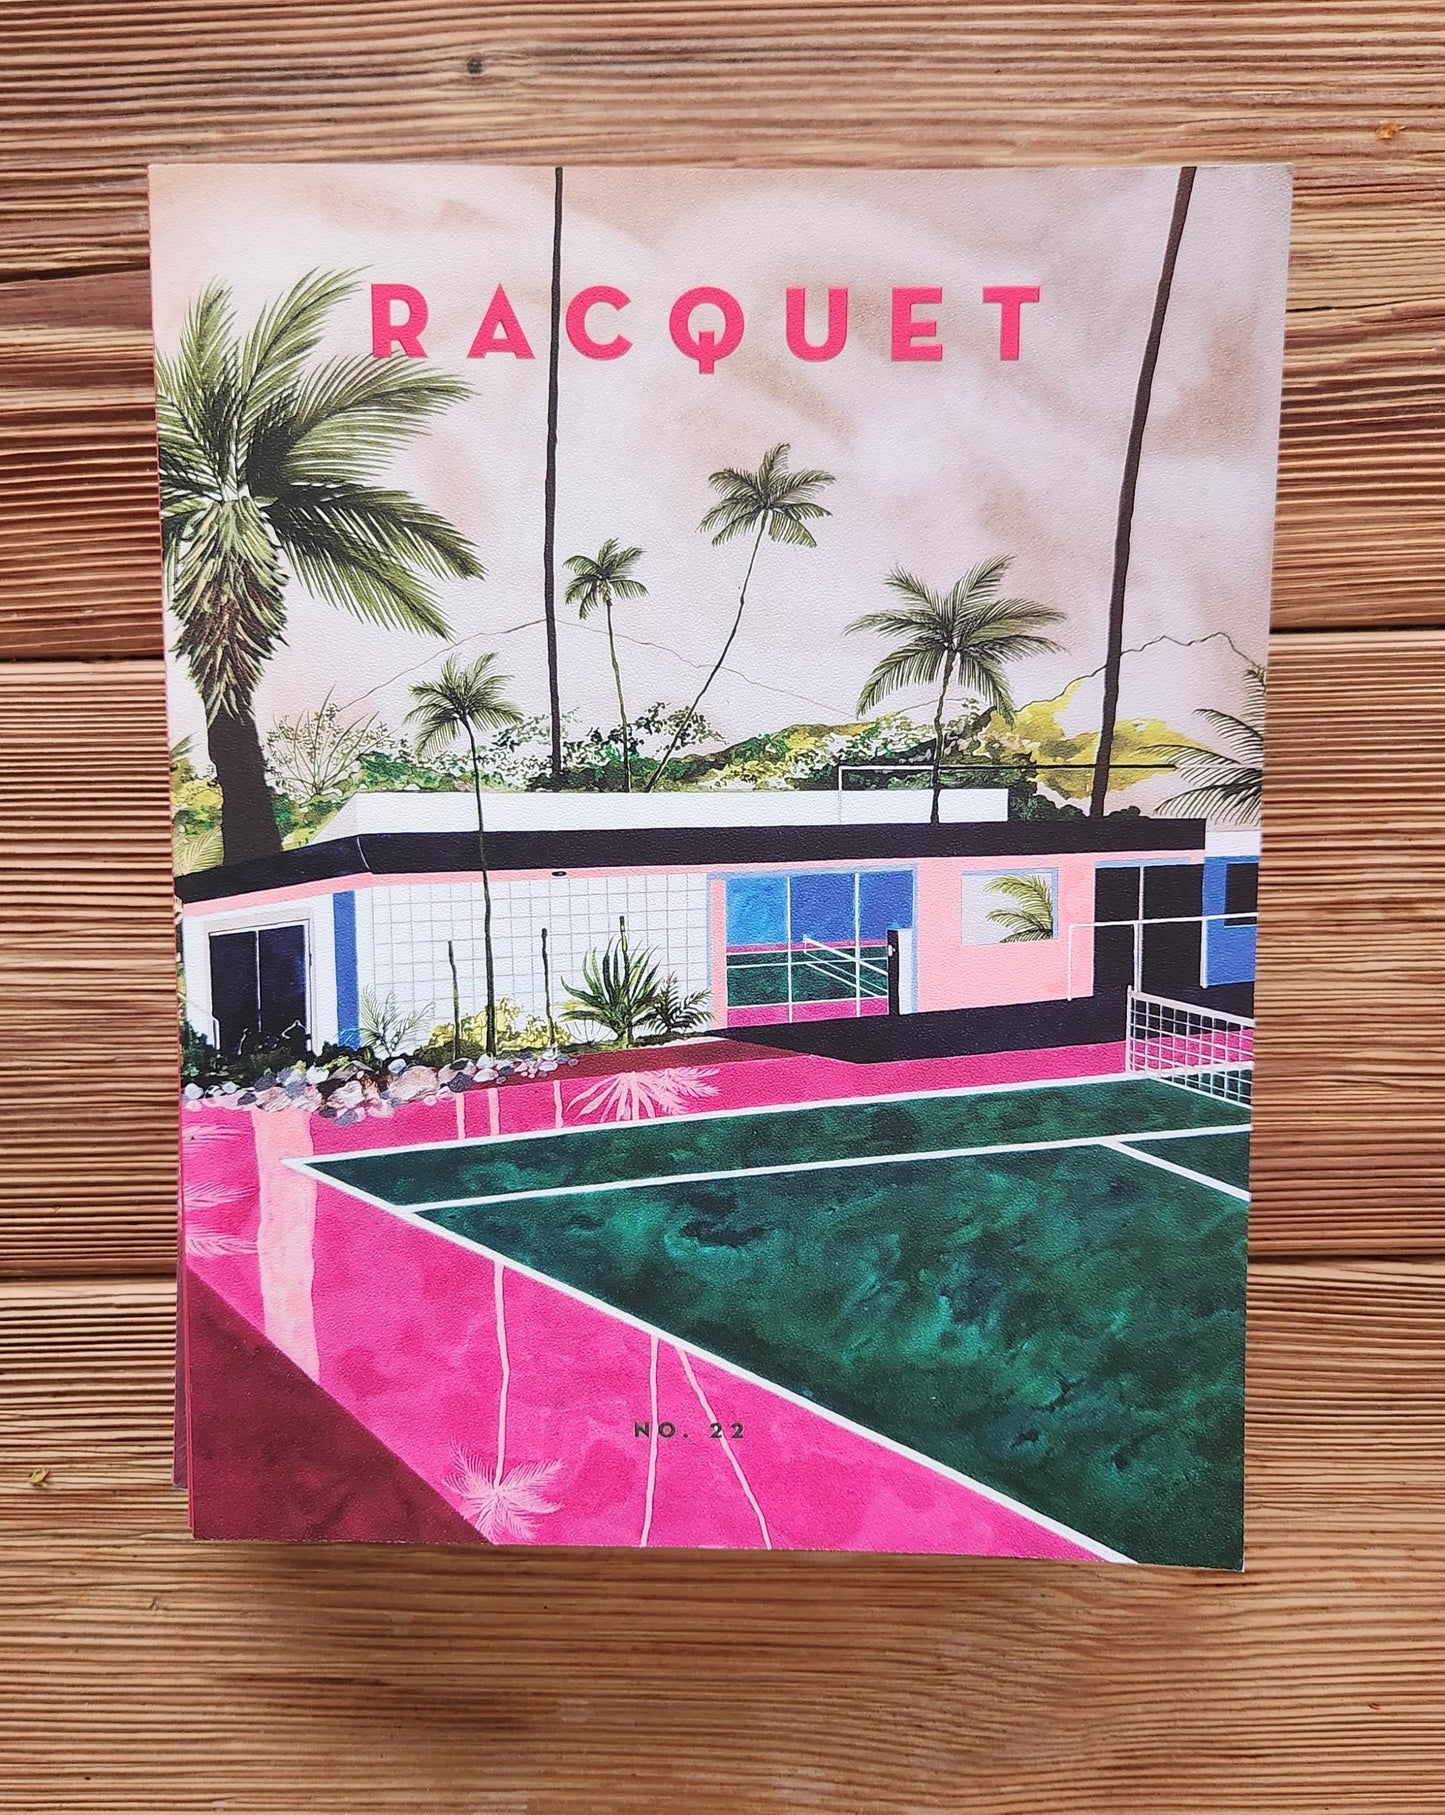 RACQUET magazine, issue no. 22